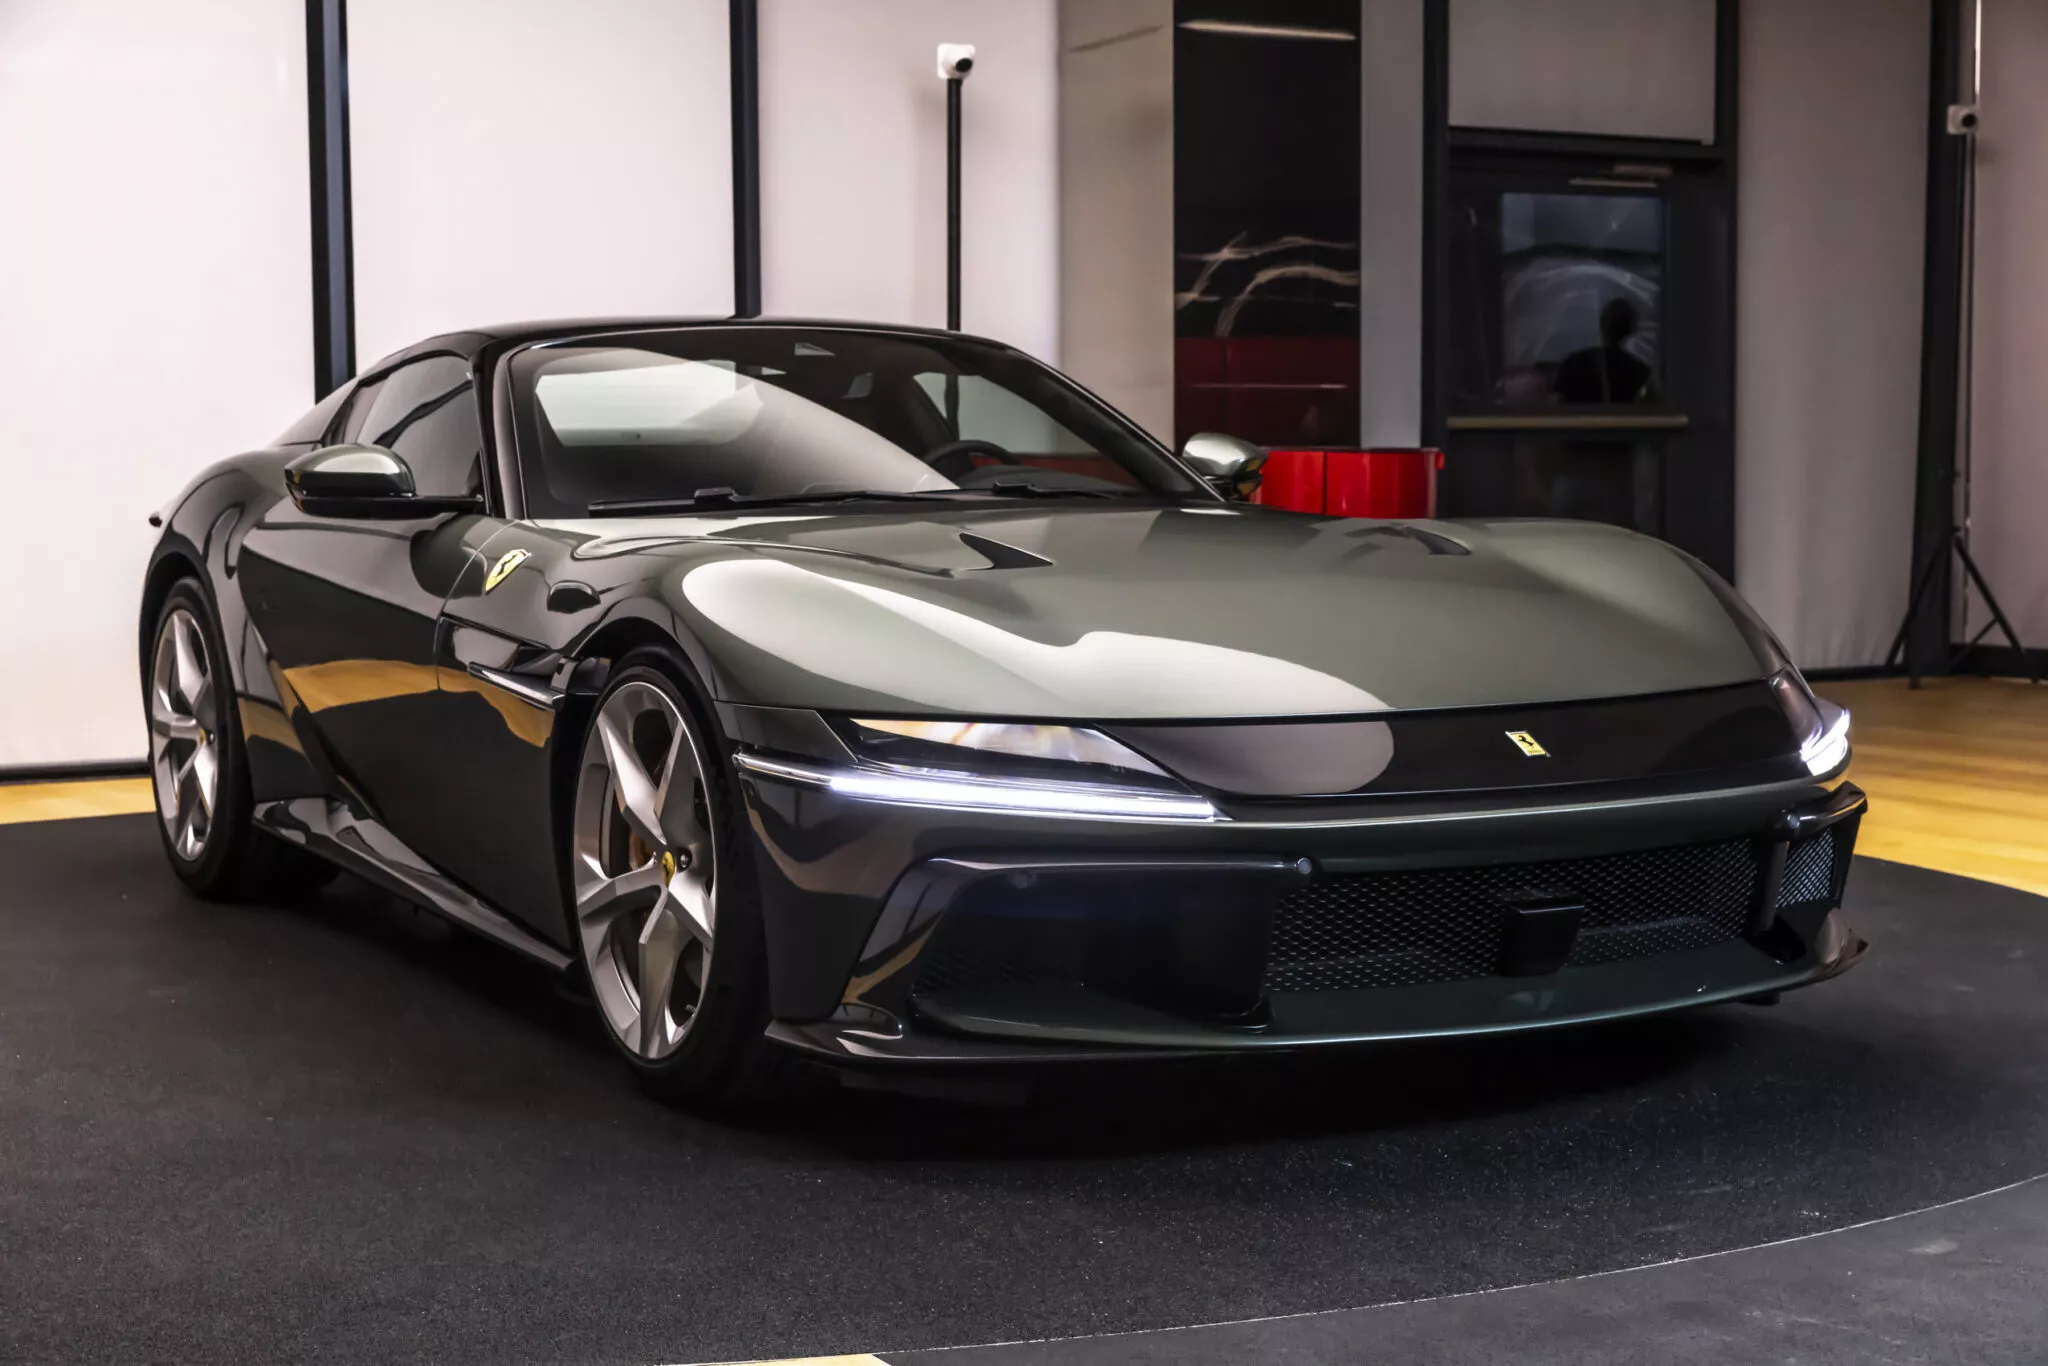 Ferrari 12Cilindri ra mắt, giá hơn 10 tỷ đồng